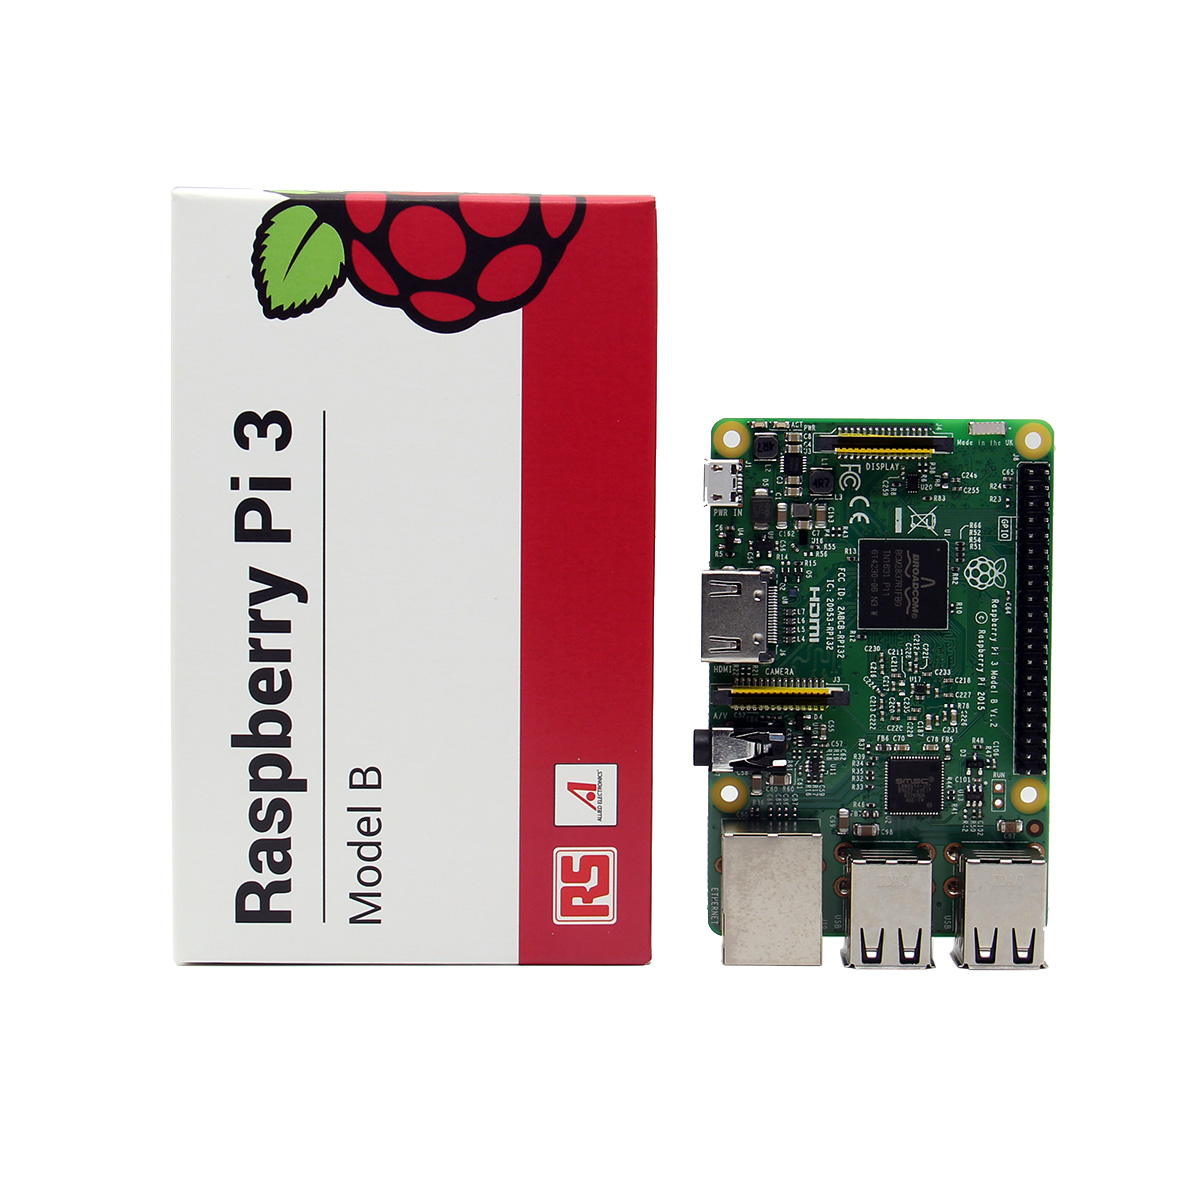 Raspberry Pi 3 Model B ARM Cortex-A53 CPU 1.2GHz 1GB RAM